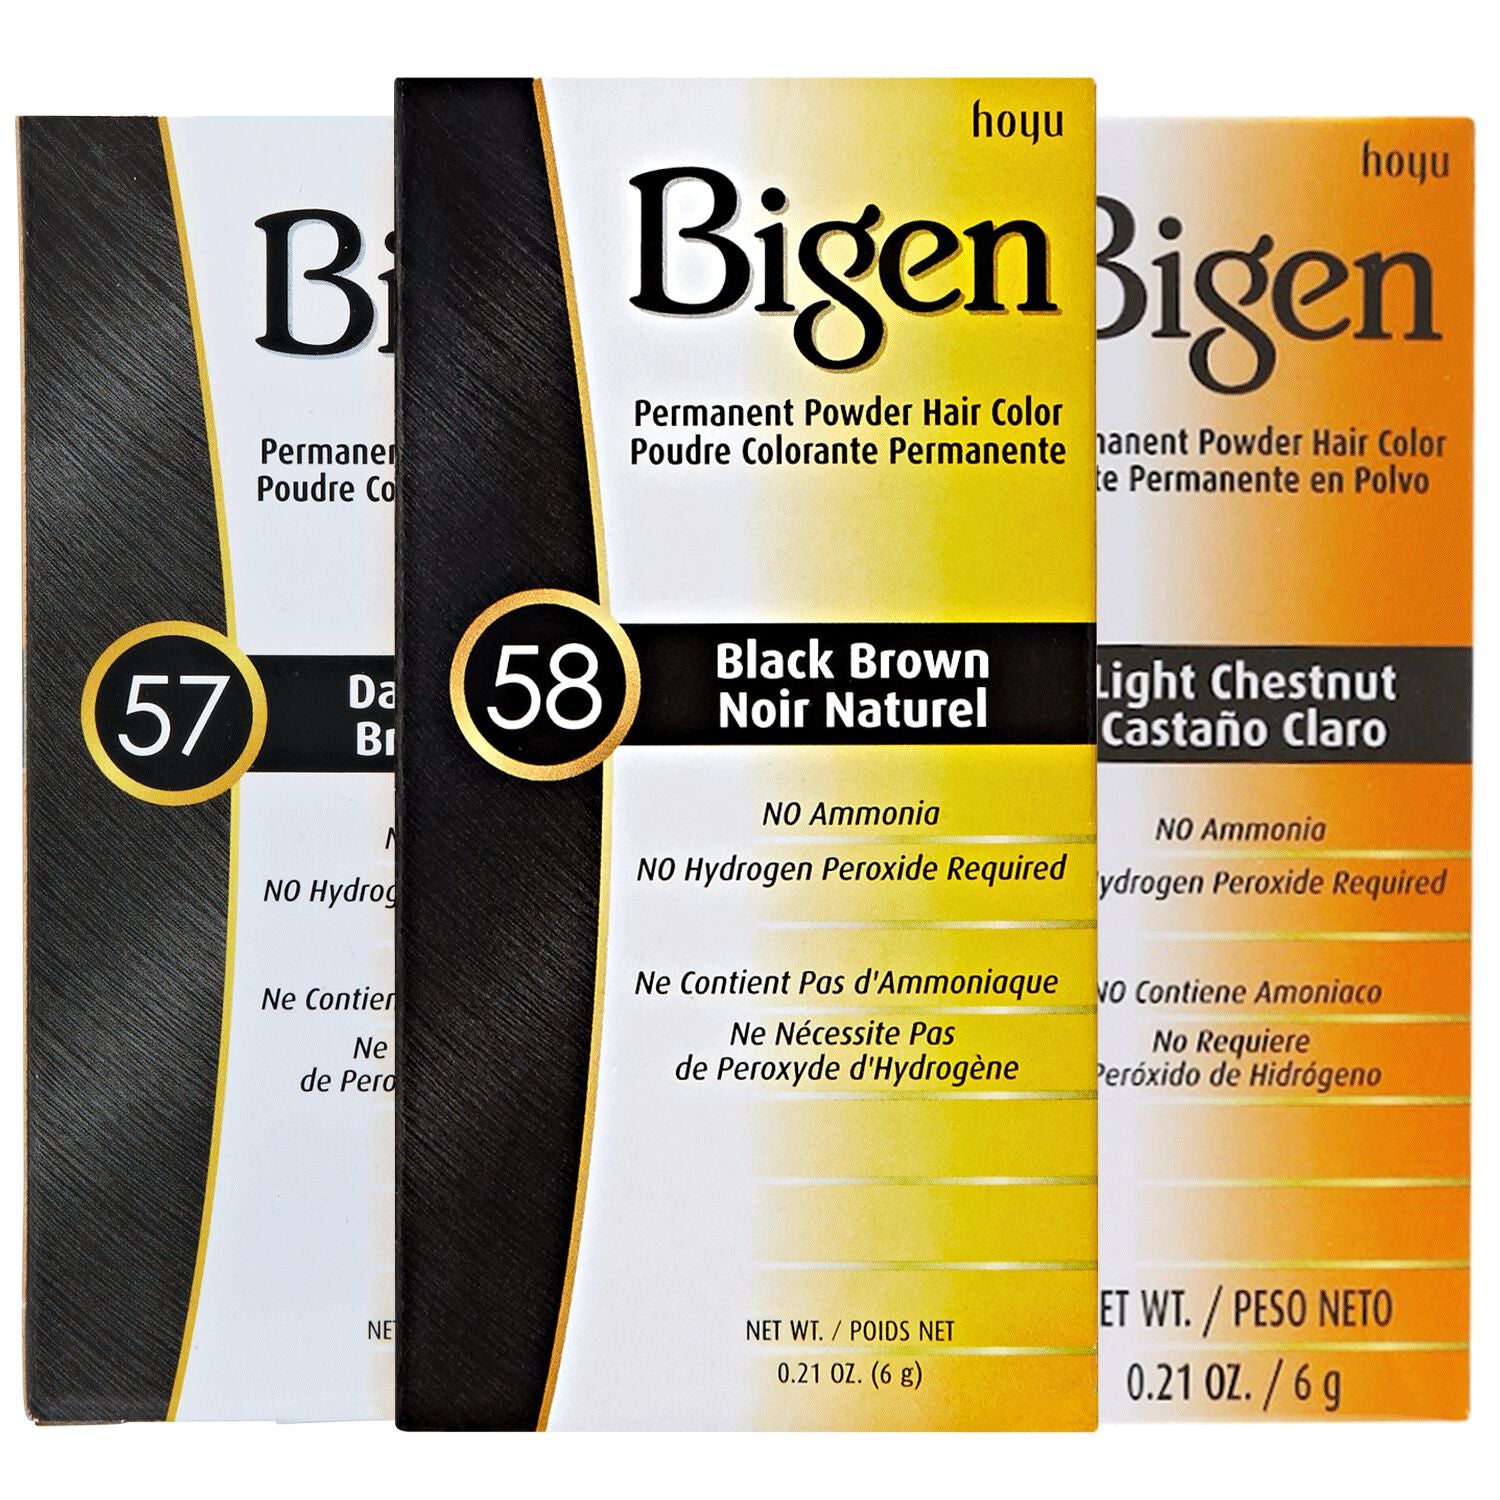 Bigen Permanent Powder Hair Color